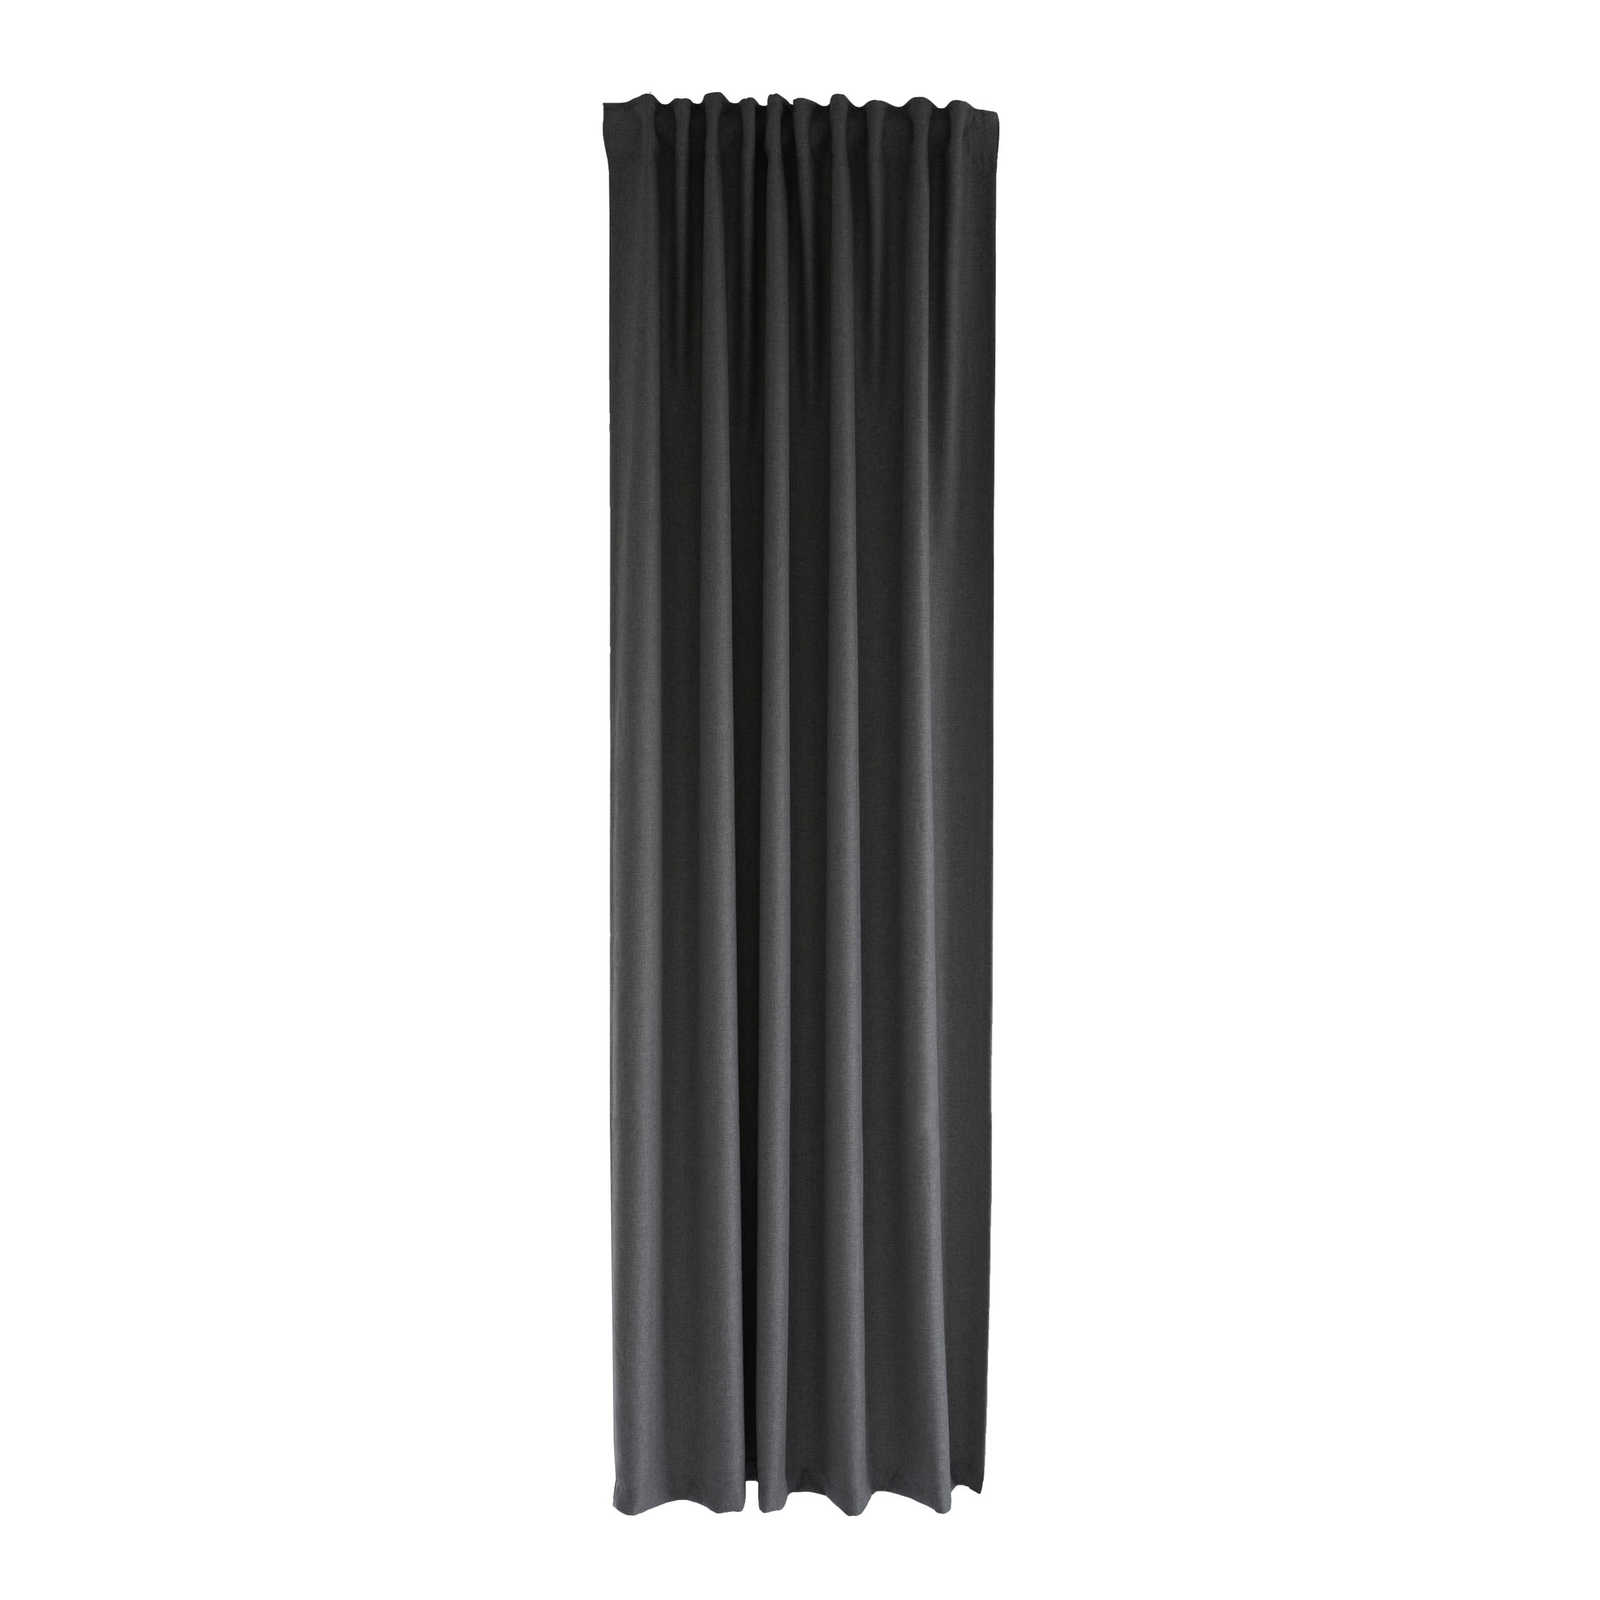         Decorative loop scarf 140 cm x 245 cm synthetic fibre graphite
    